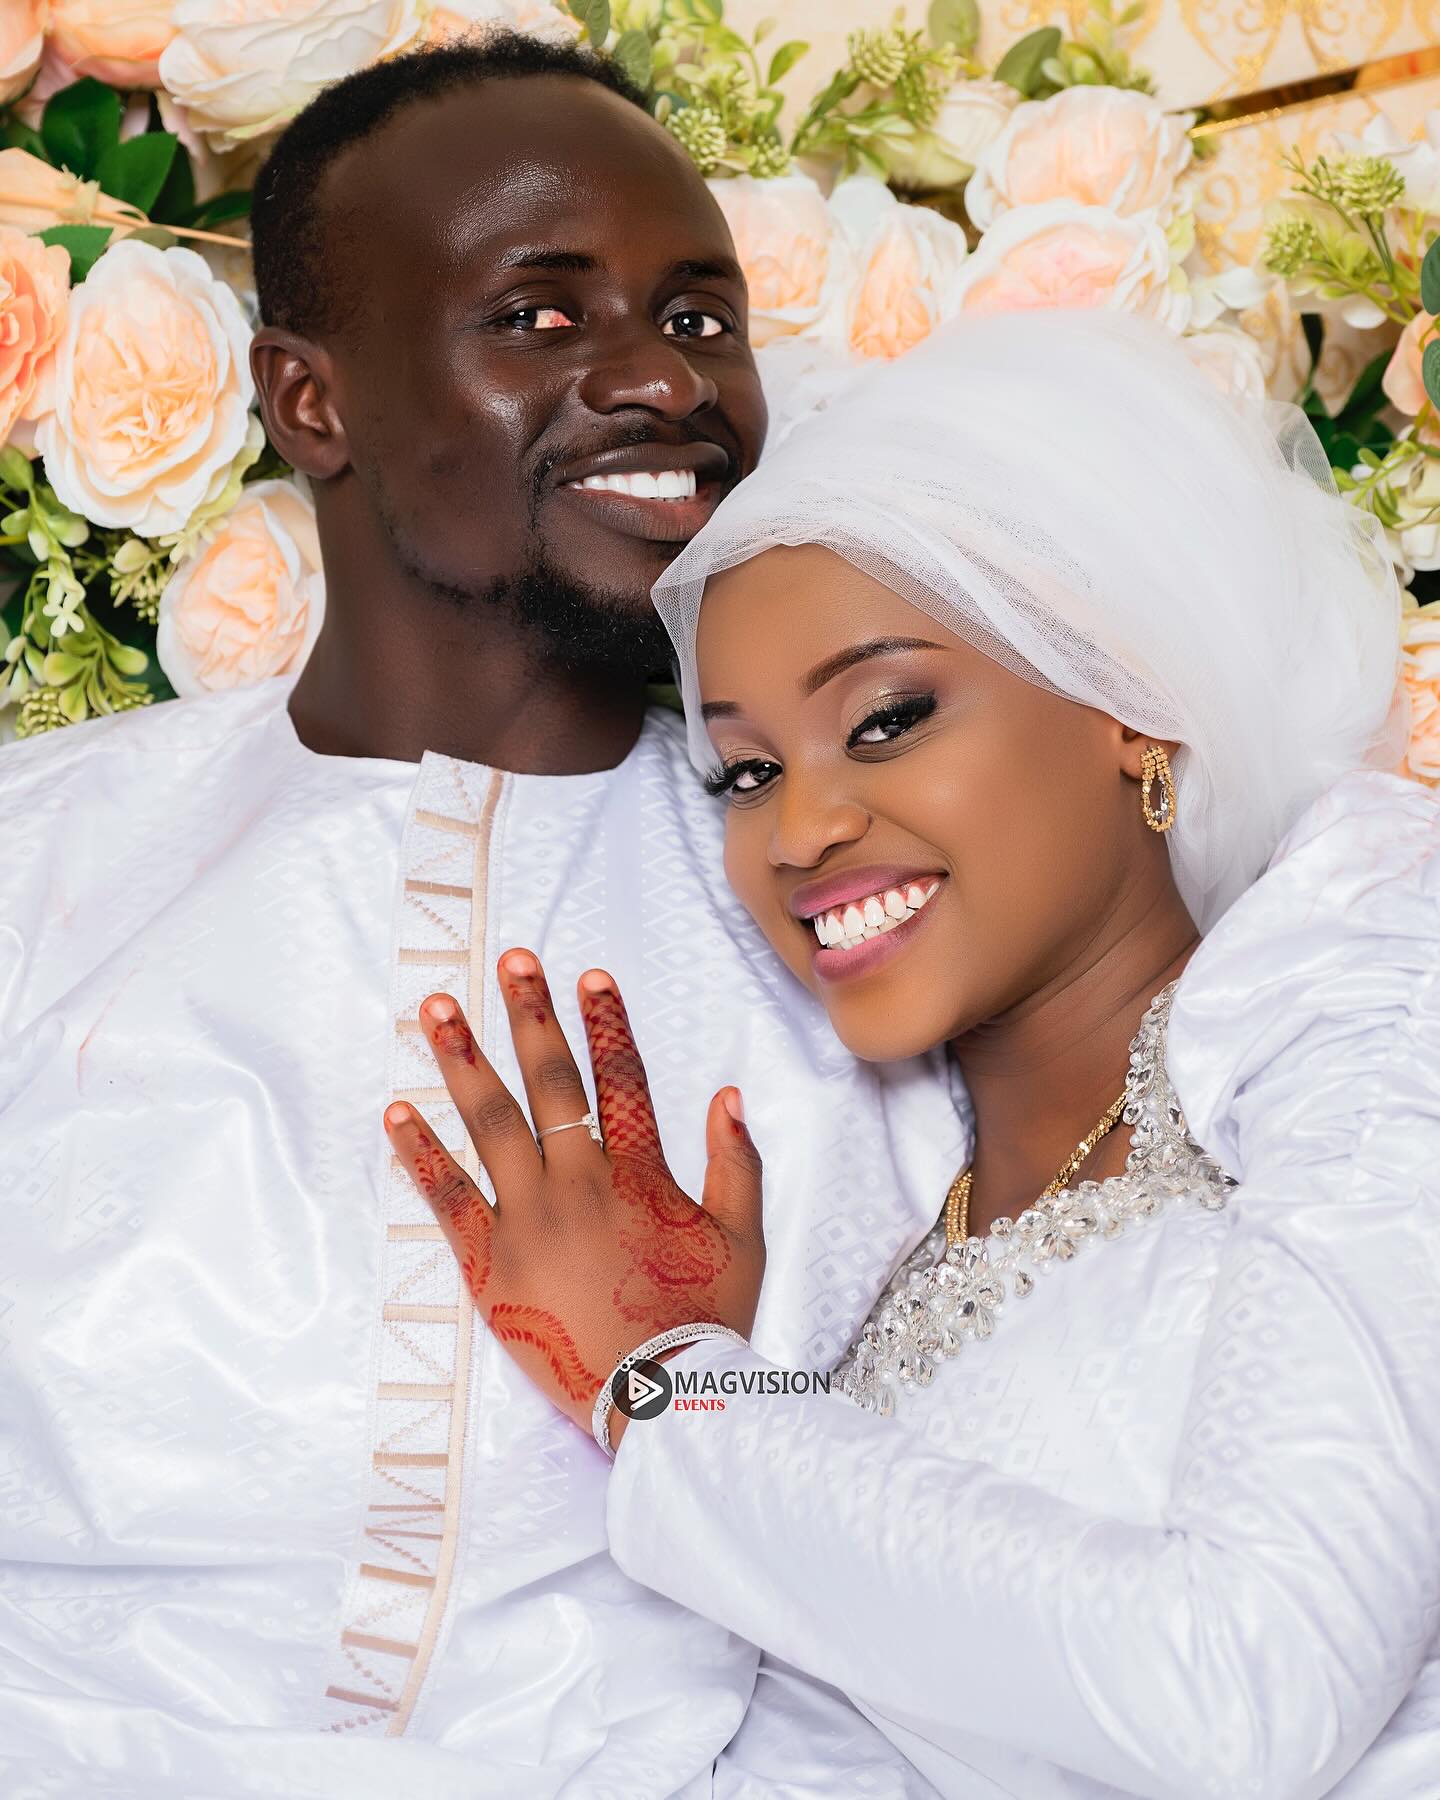 Mariage : Sadio Mané et Aicha Tamba s'affichent !